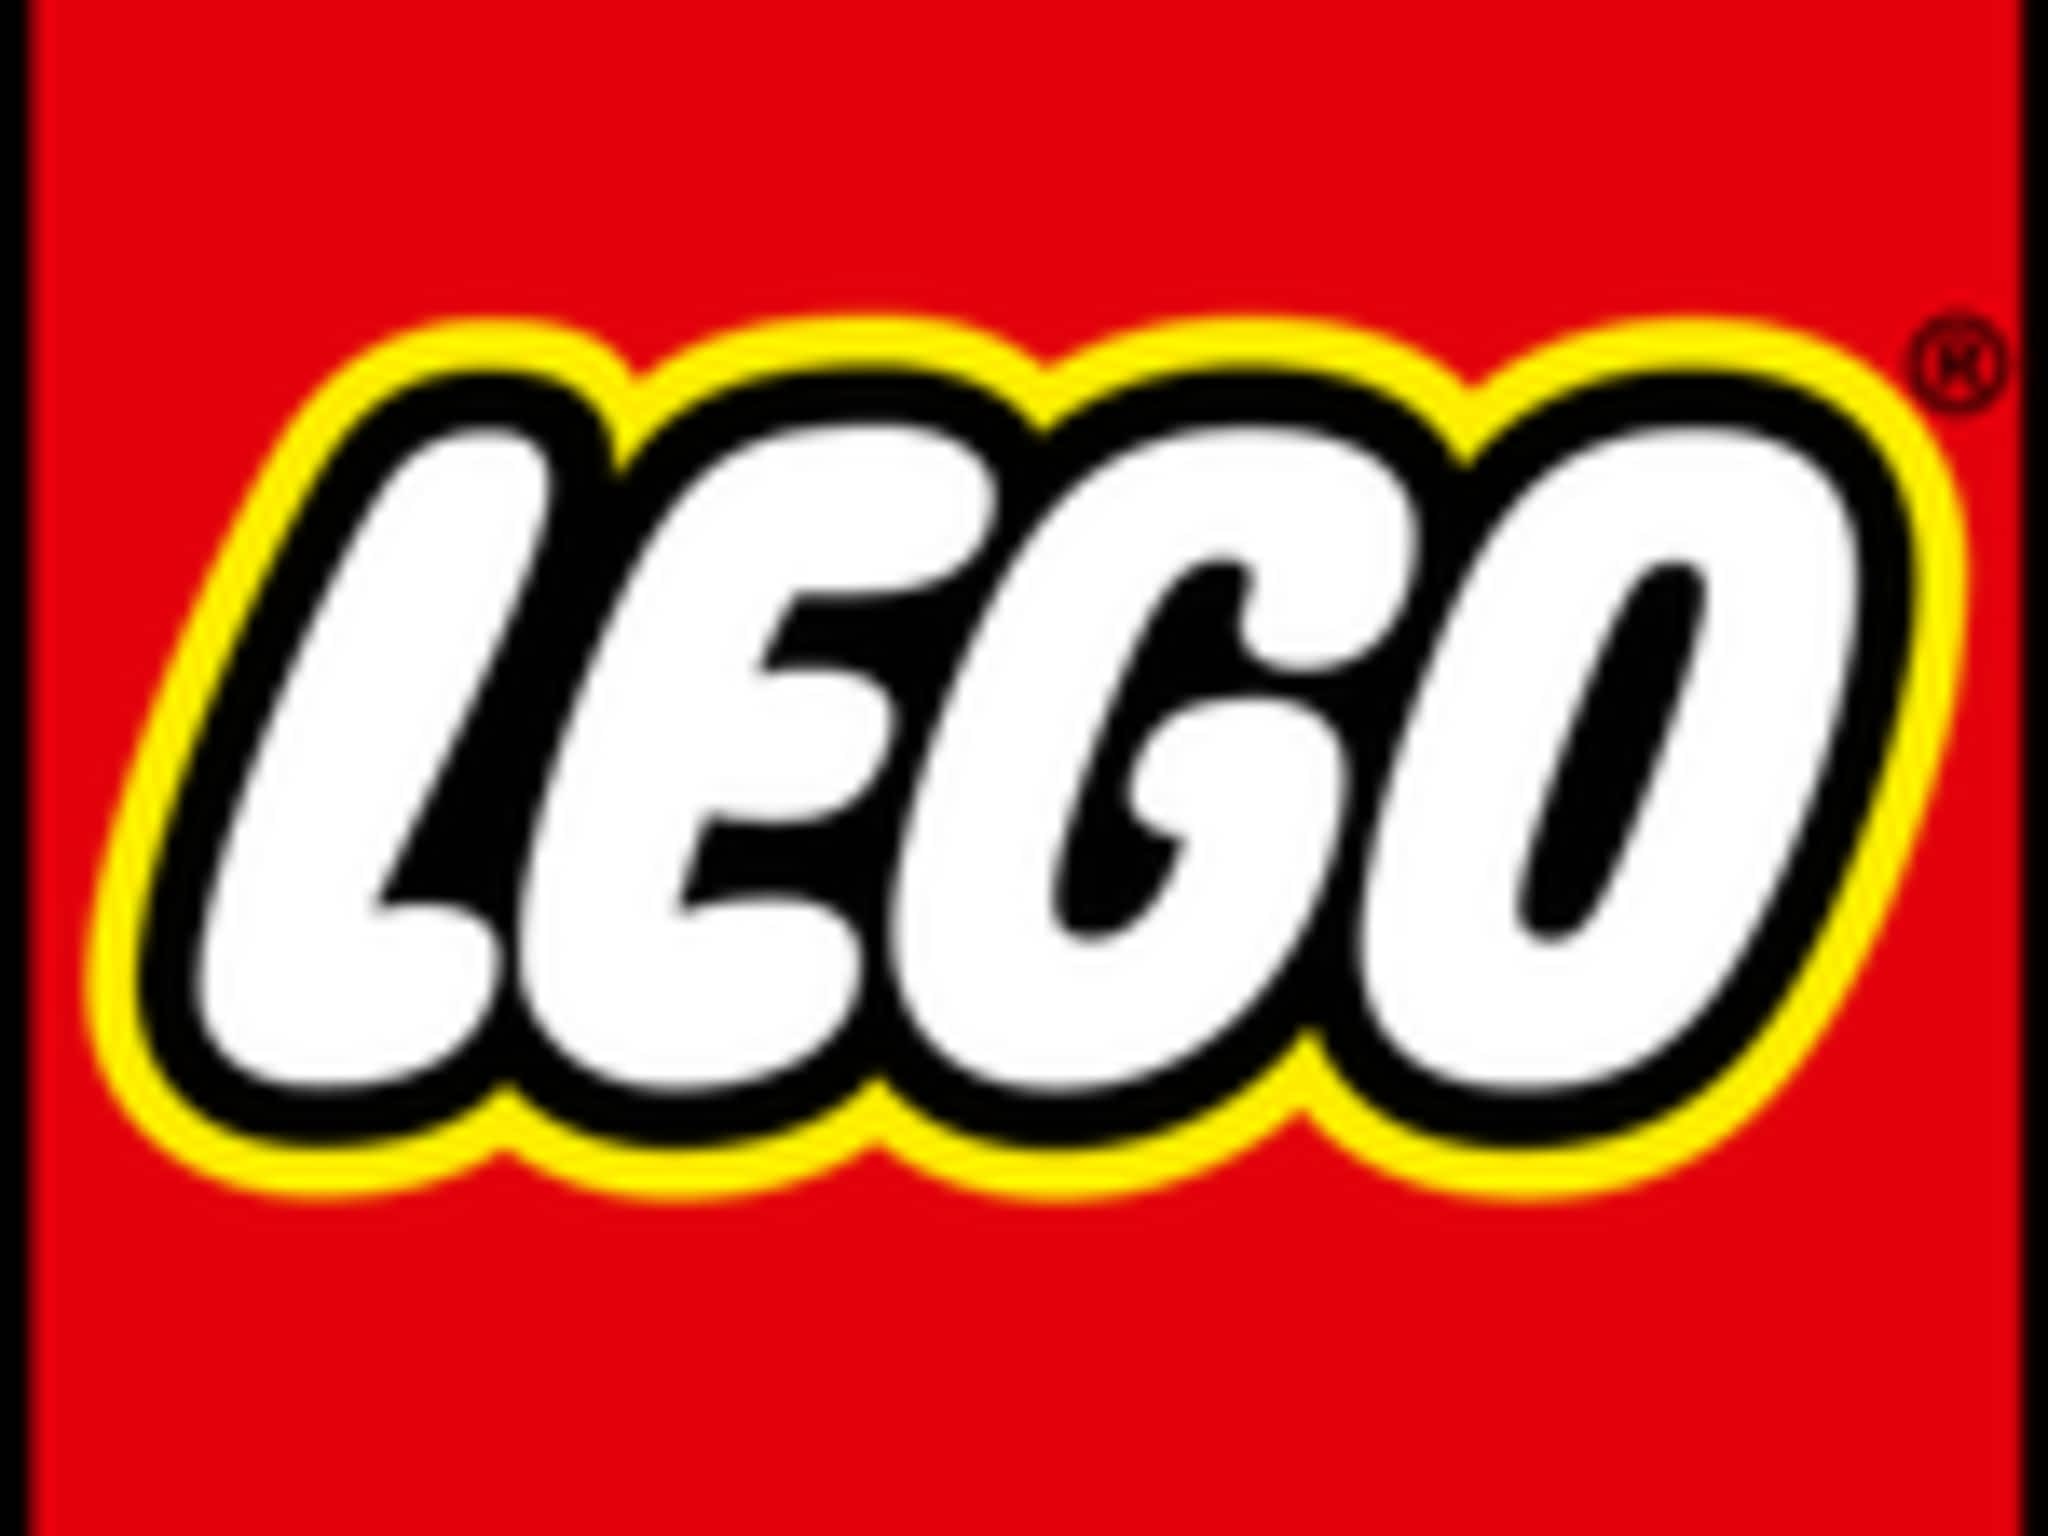 photo The LEGO® Store Southgate